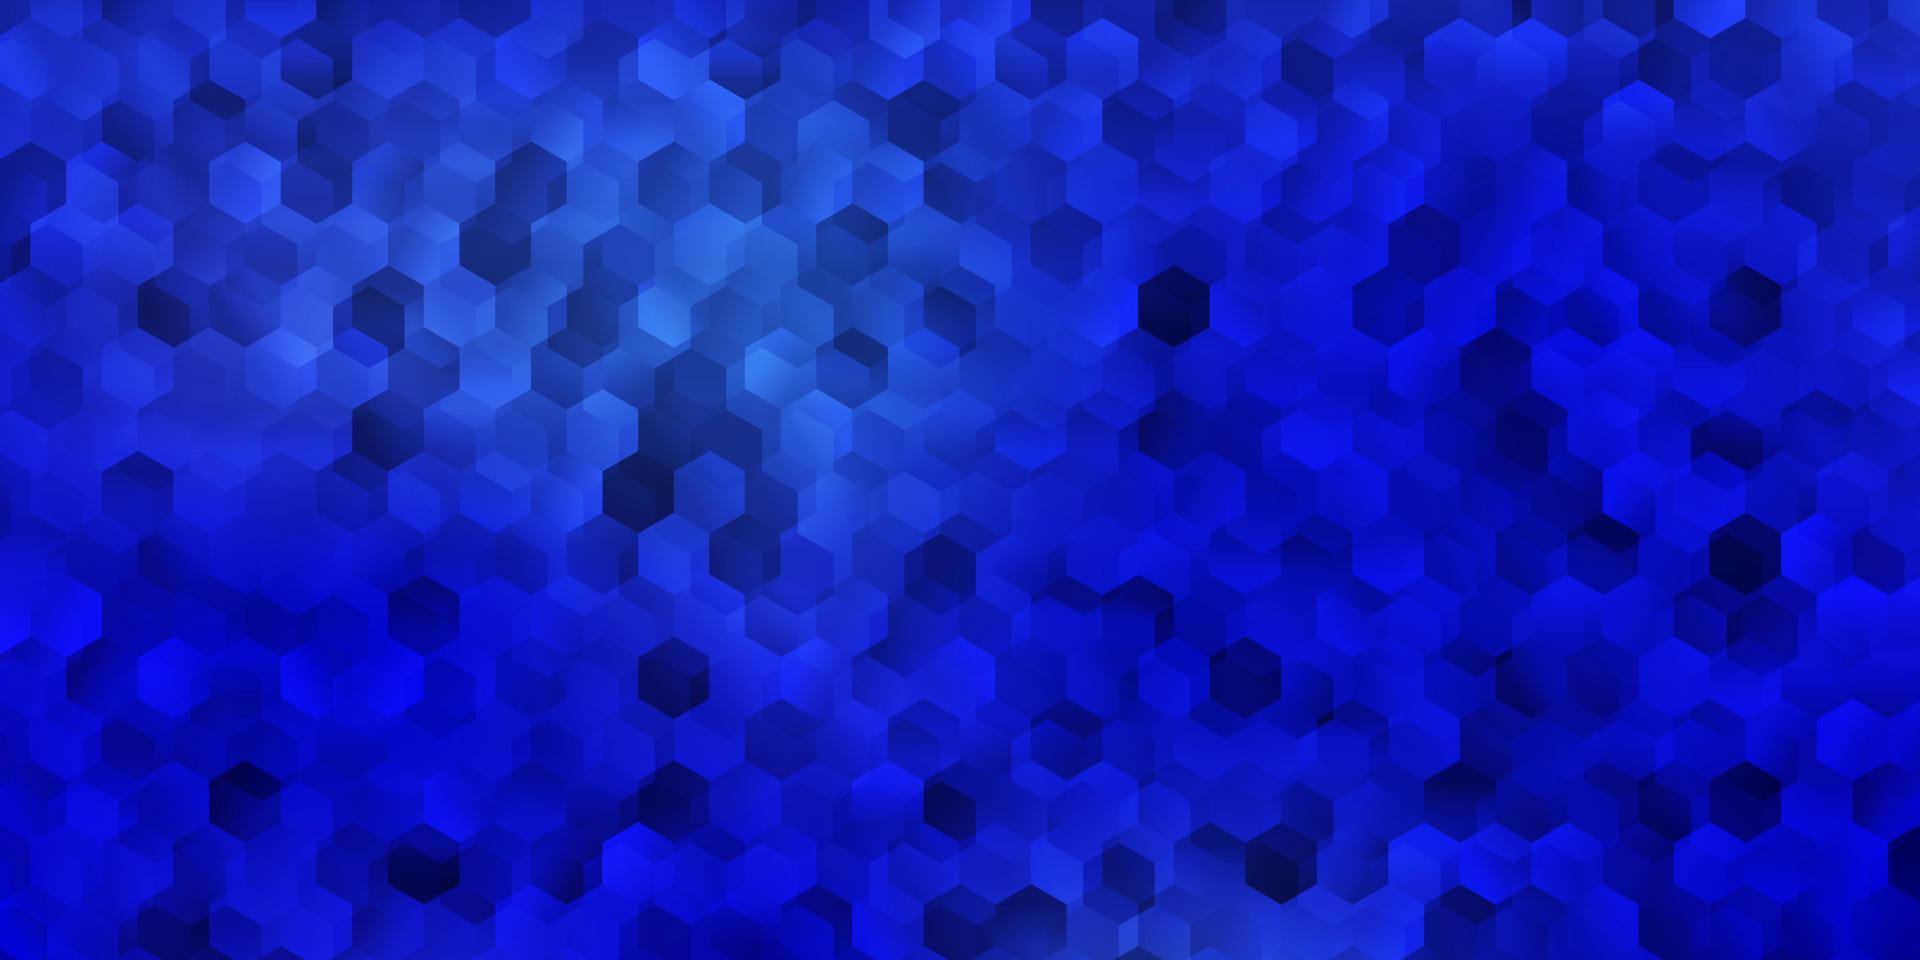 fond de vecteur bleu foncé avec des formes hexagonales.